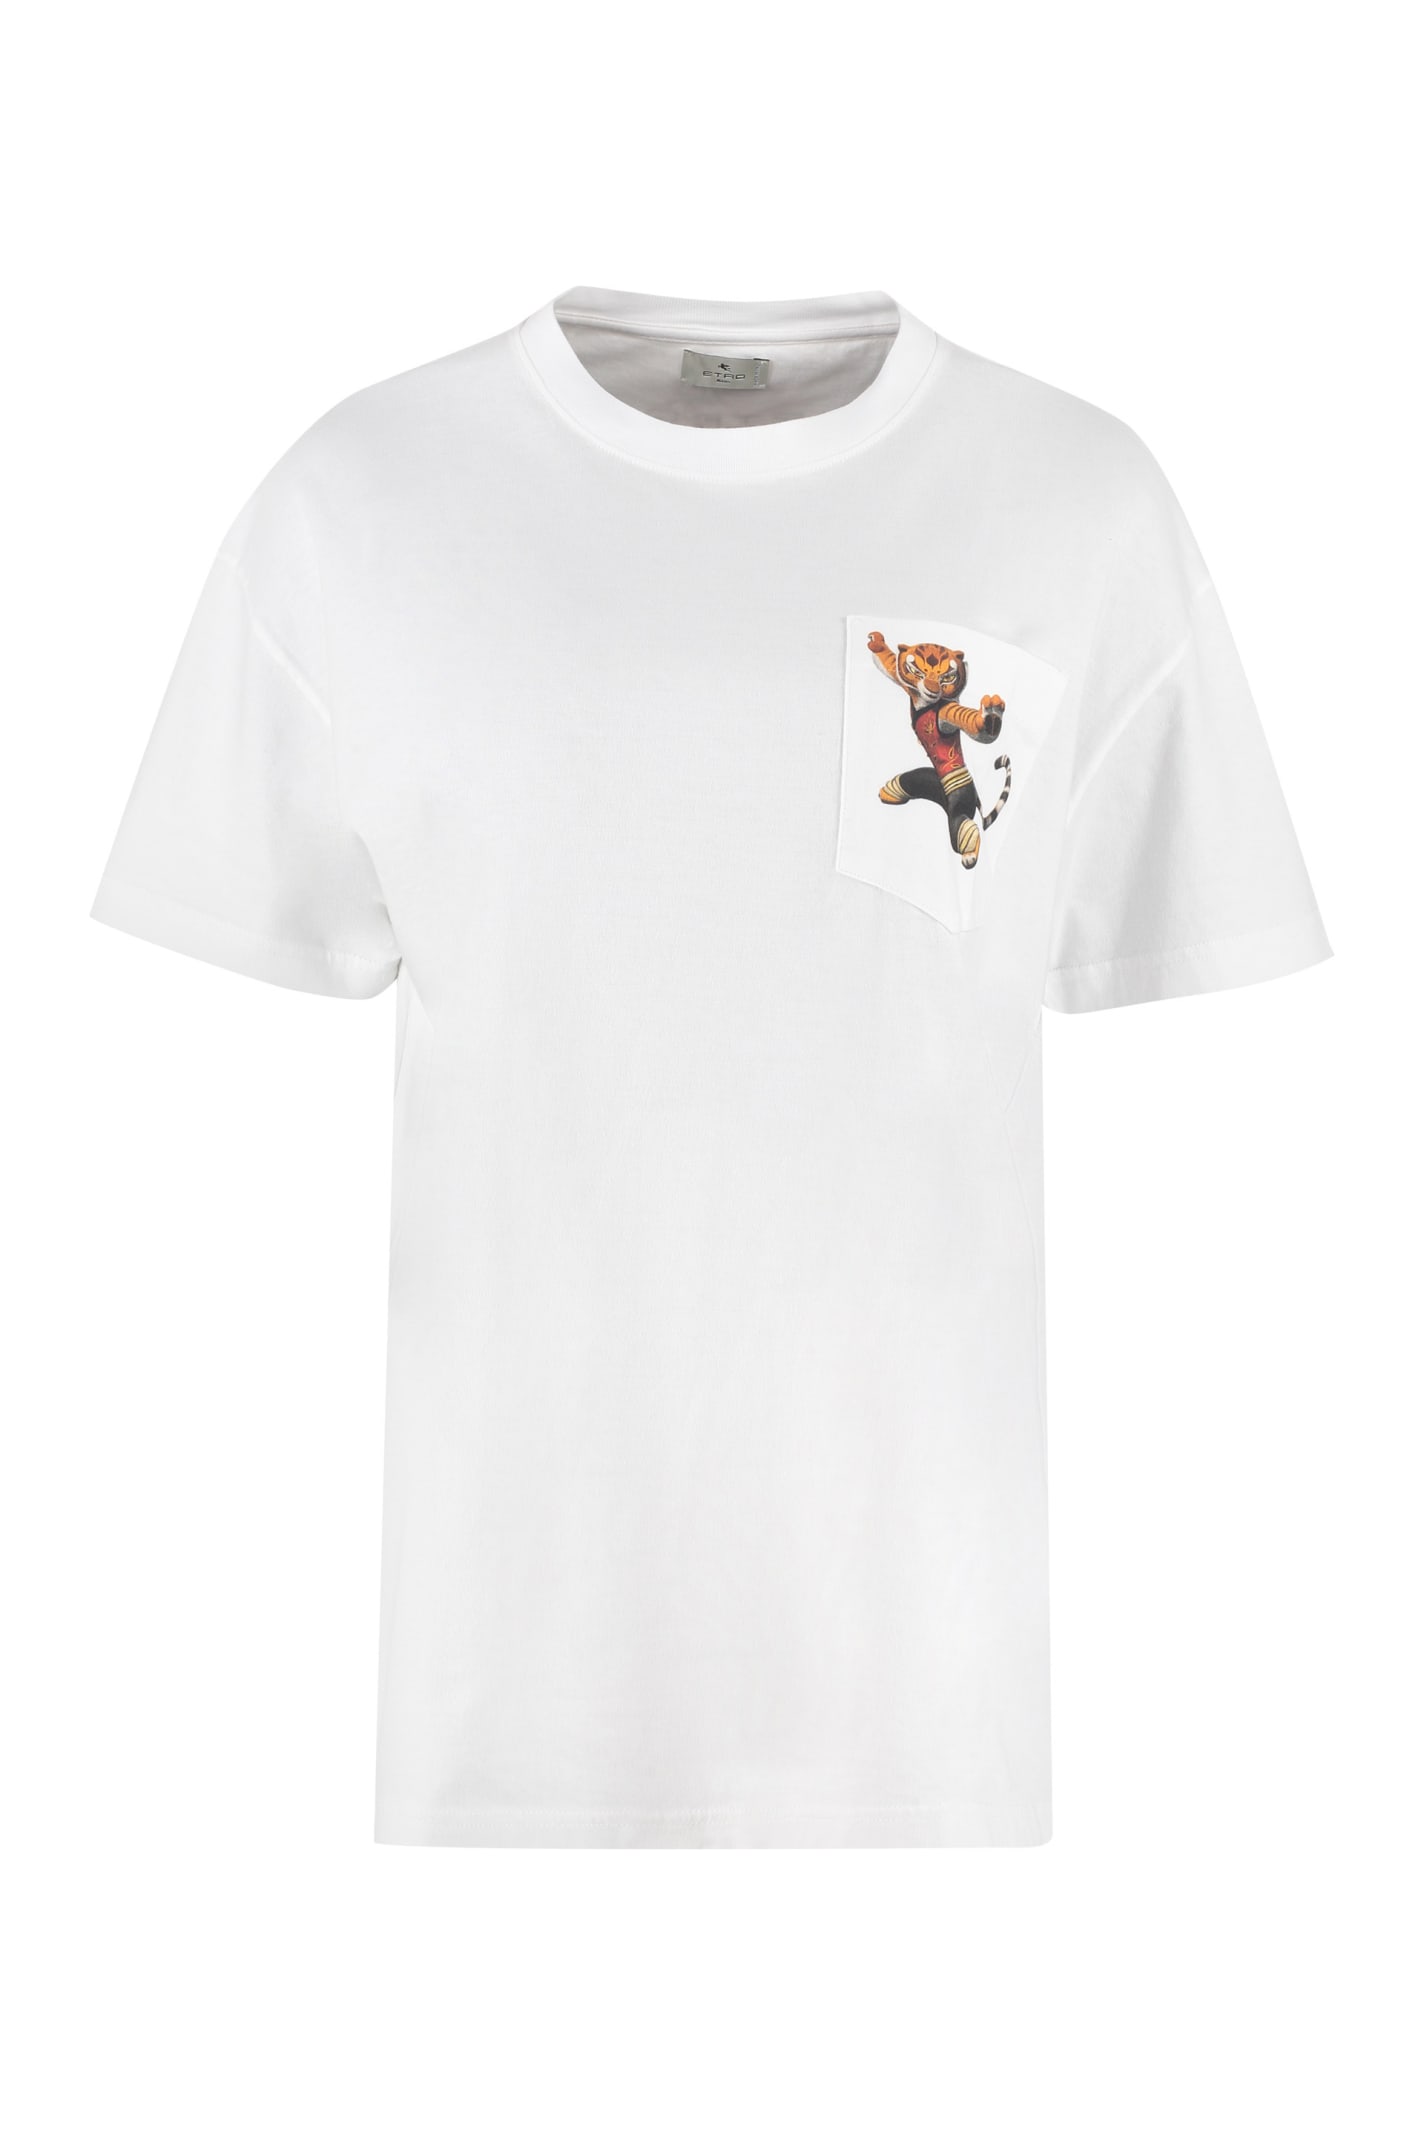 Etro Printed Cotton T-shirt